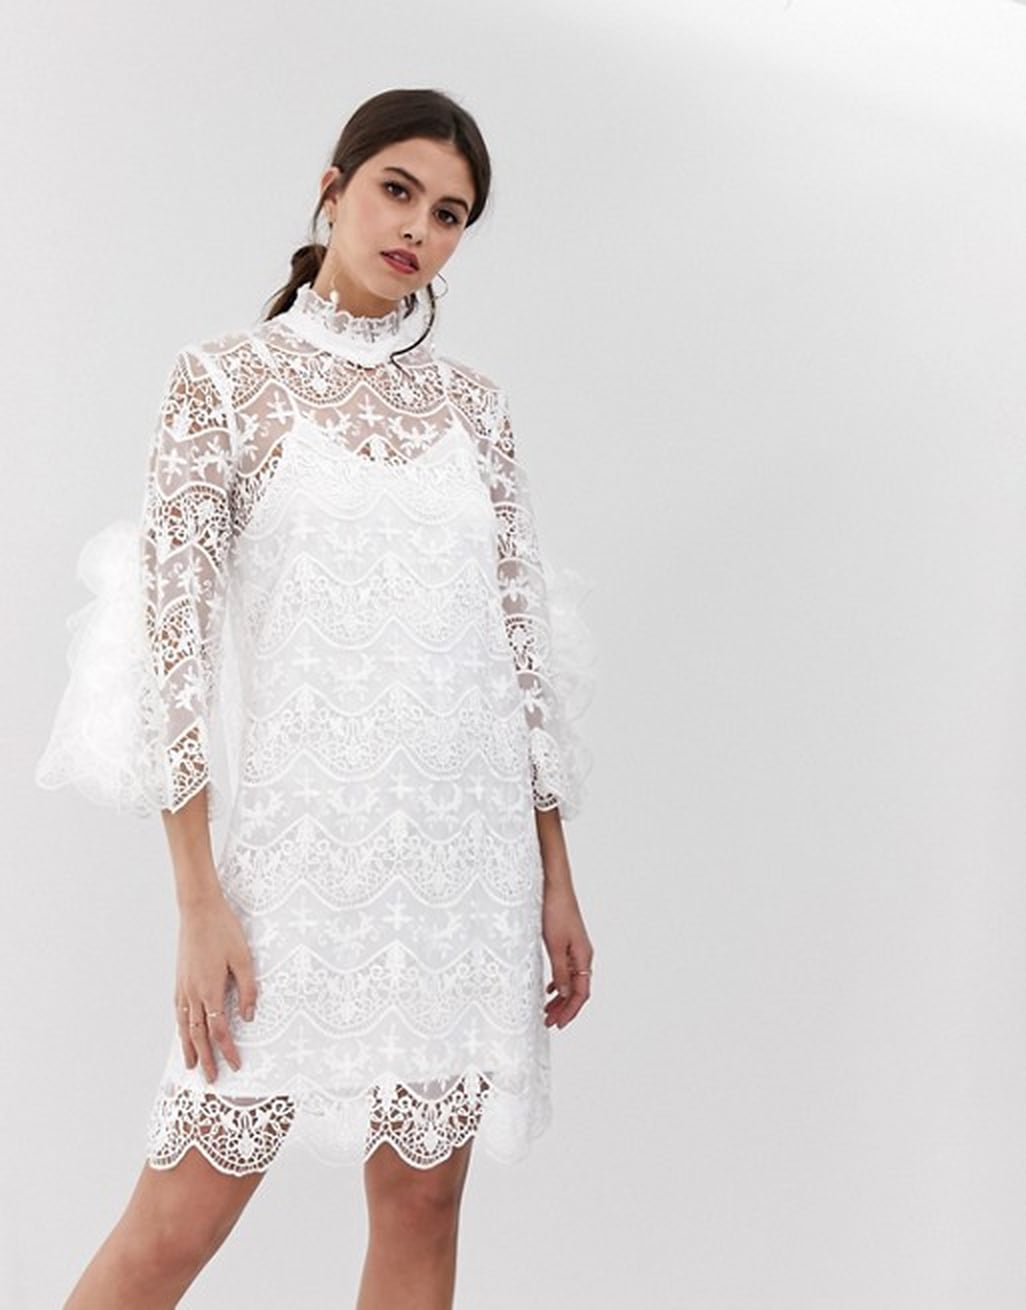 These Cheap ASOS Wedding Dresses Are Super Chic | POPSUGAR Fashion